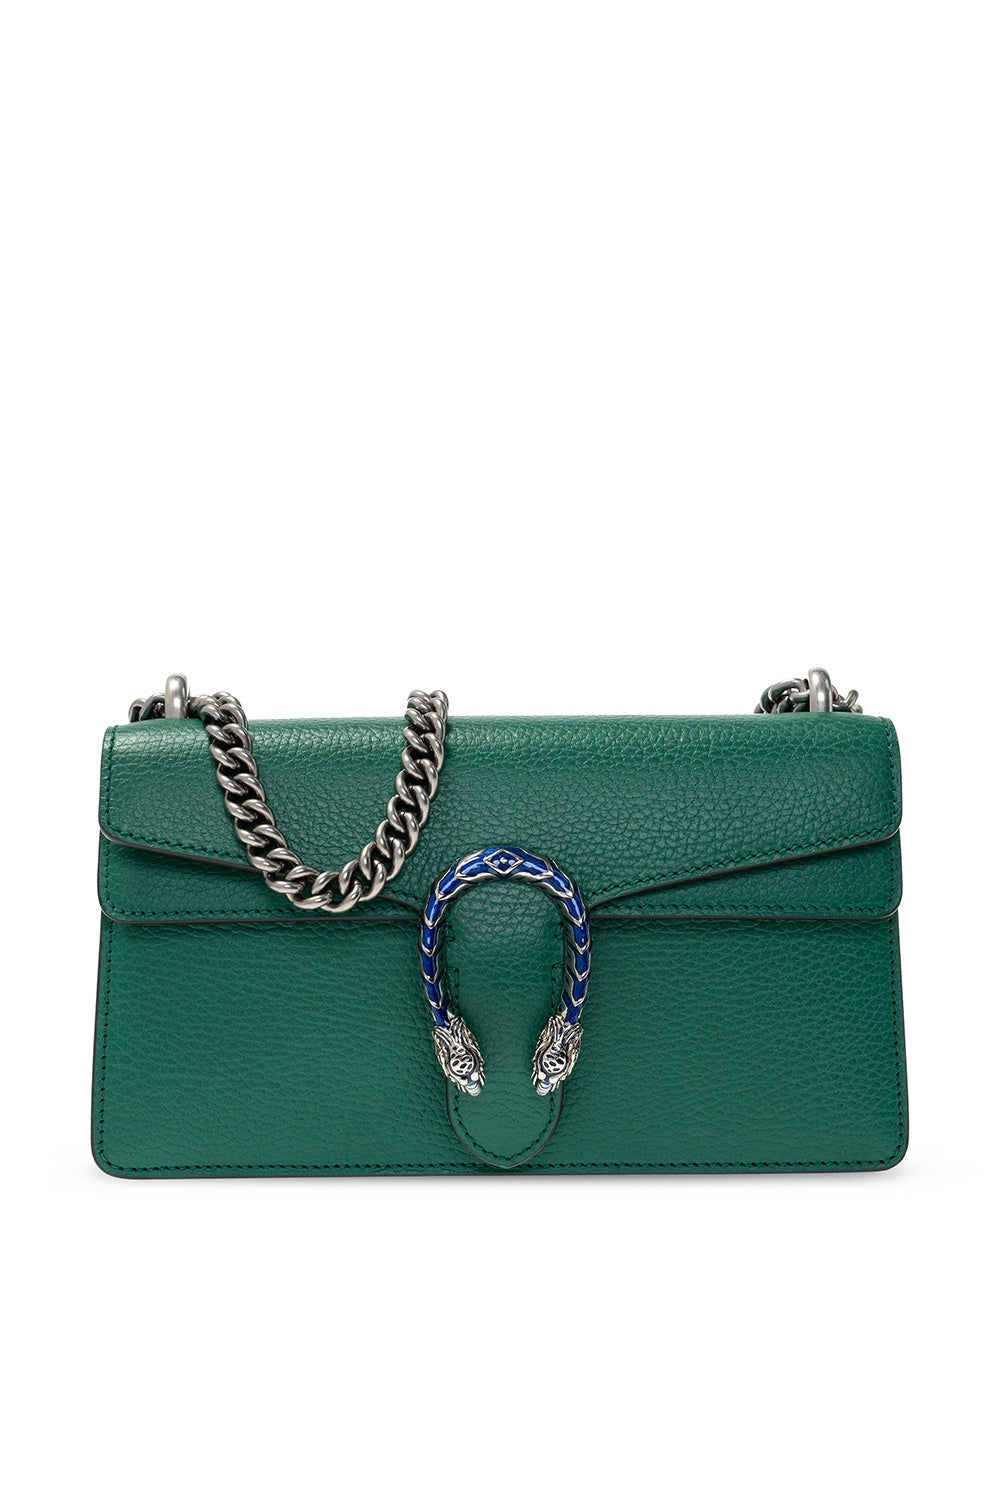 Gucci: Green Mini Dionysus Bag